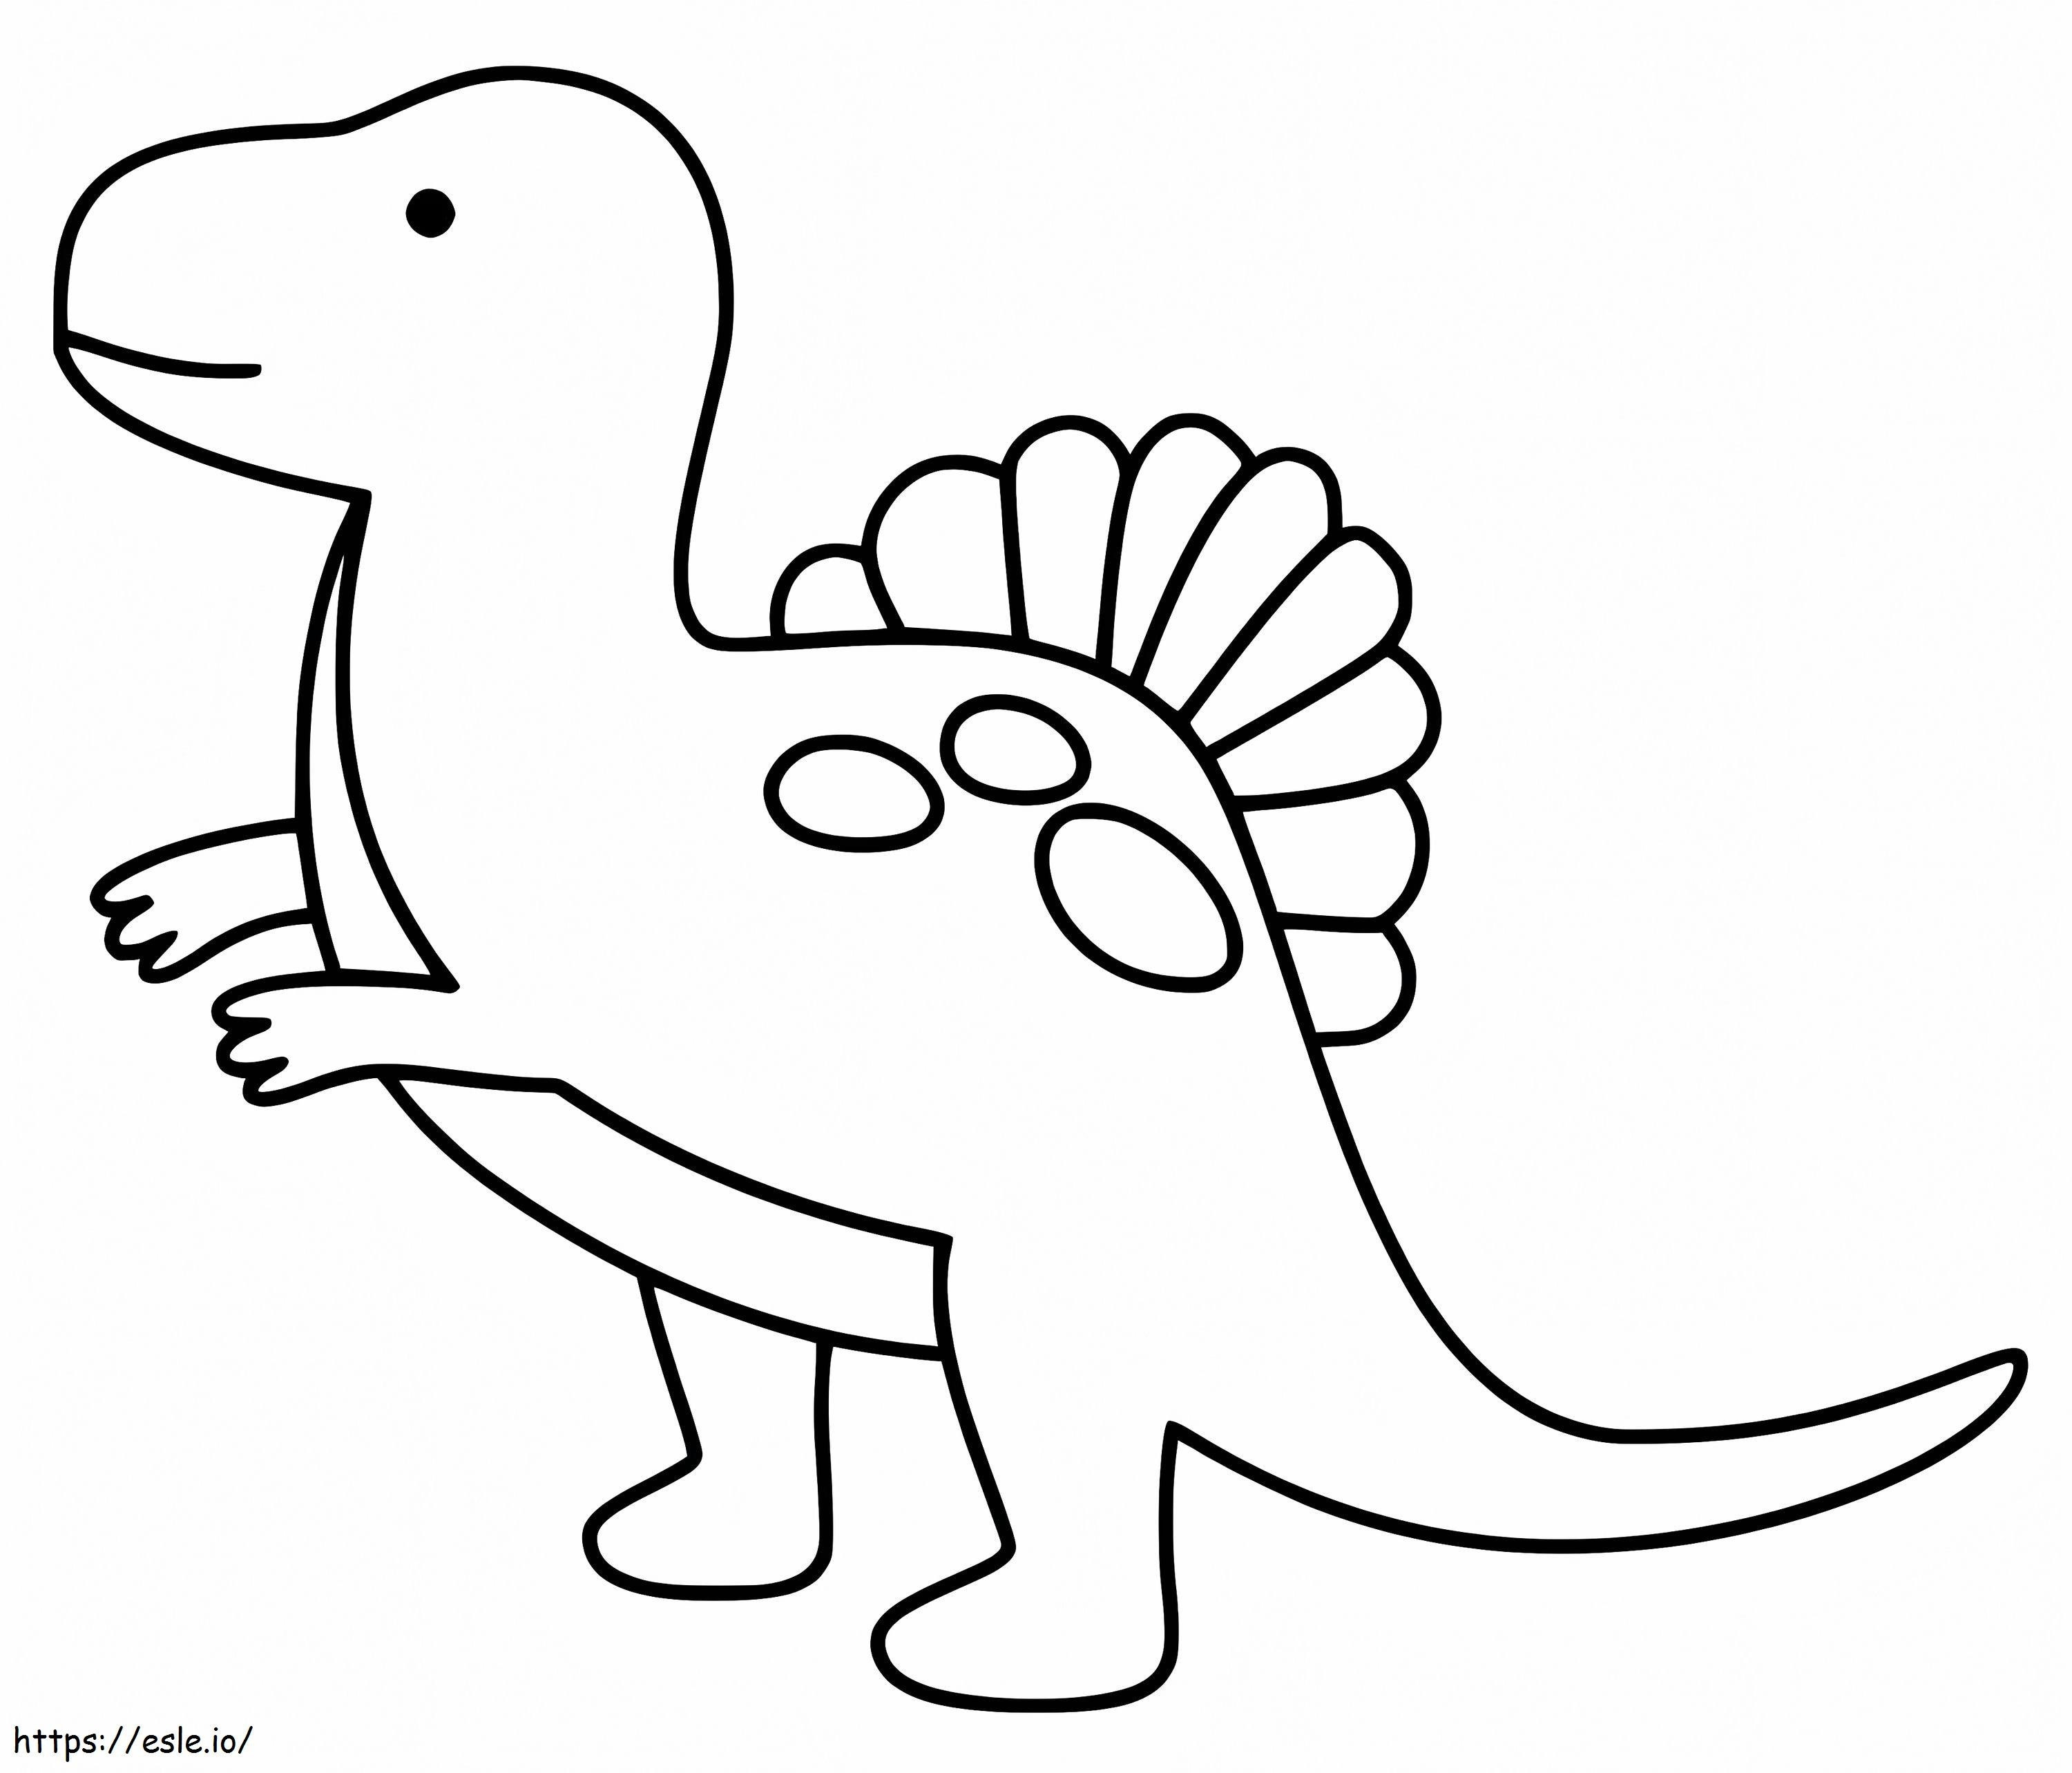 Dinossauro fofo fácil para colorir